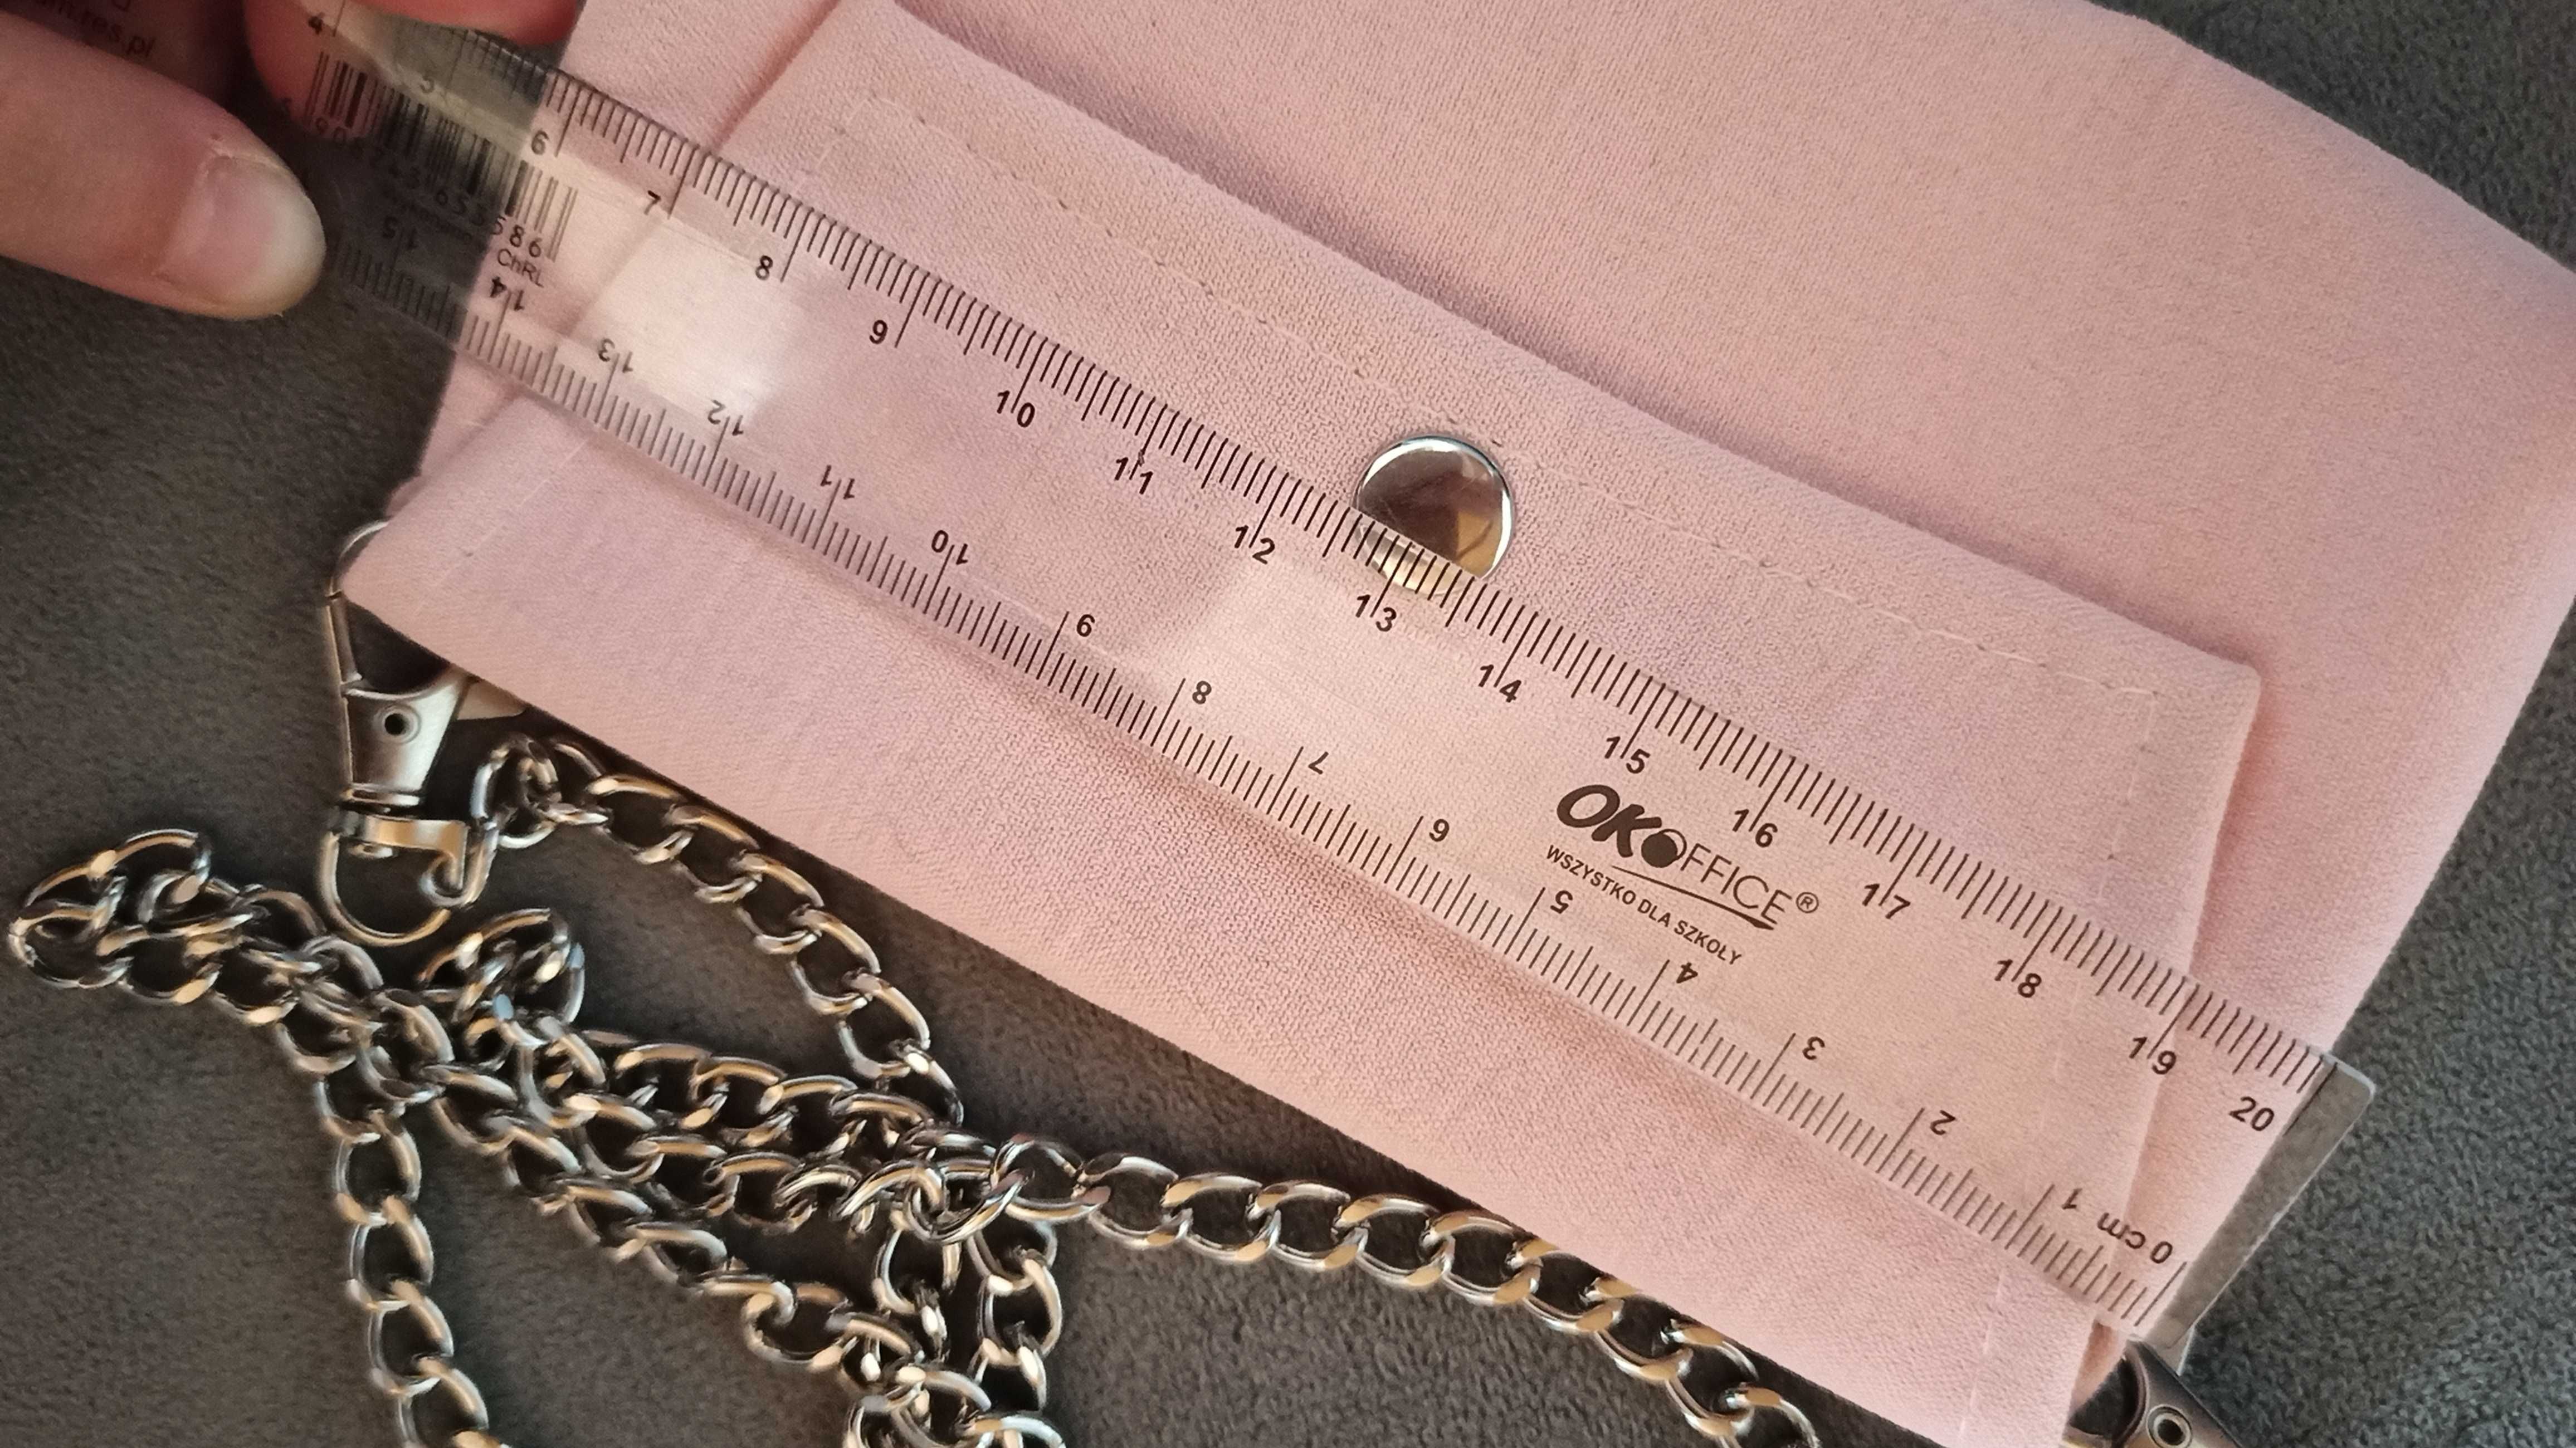 Torebka na łańcuszku dziewczynka 5 6 lat różowa mini koperta elegancka